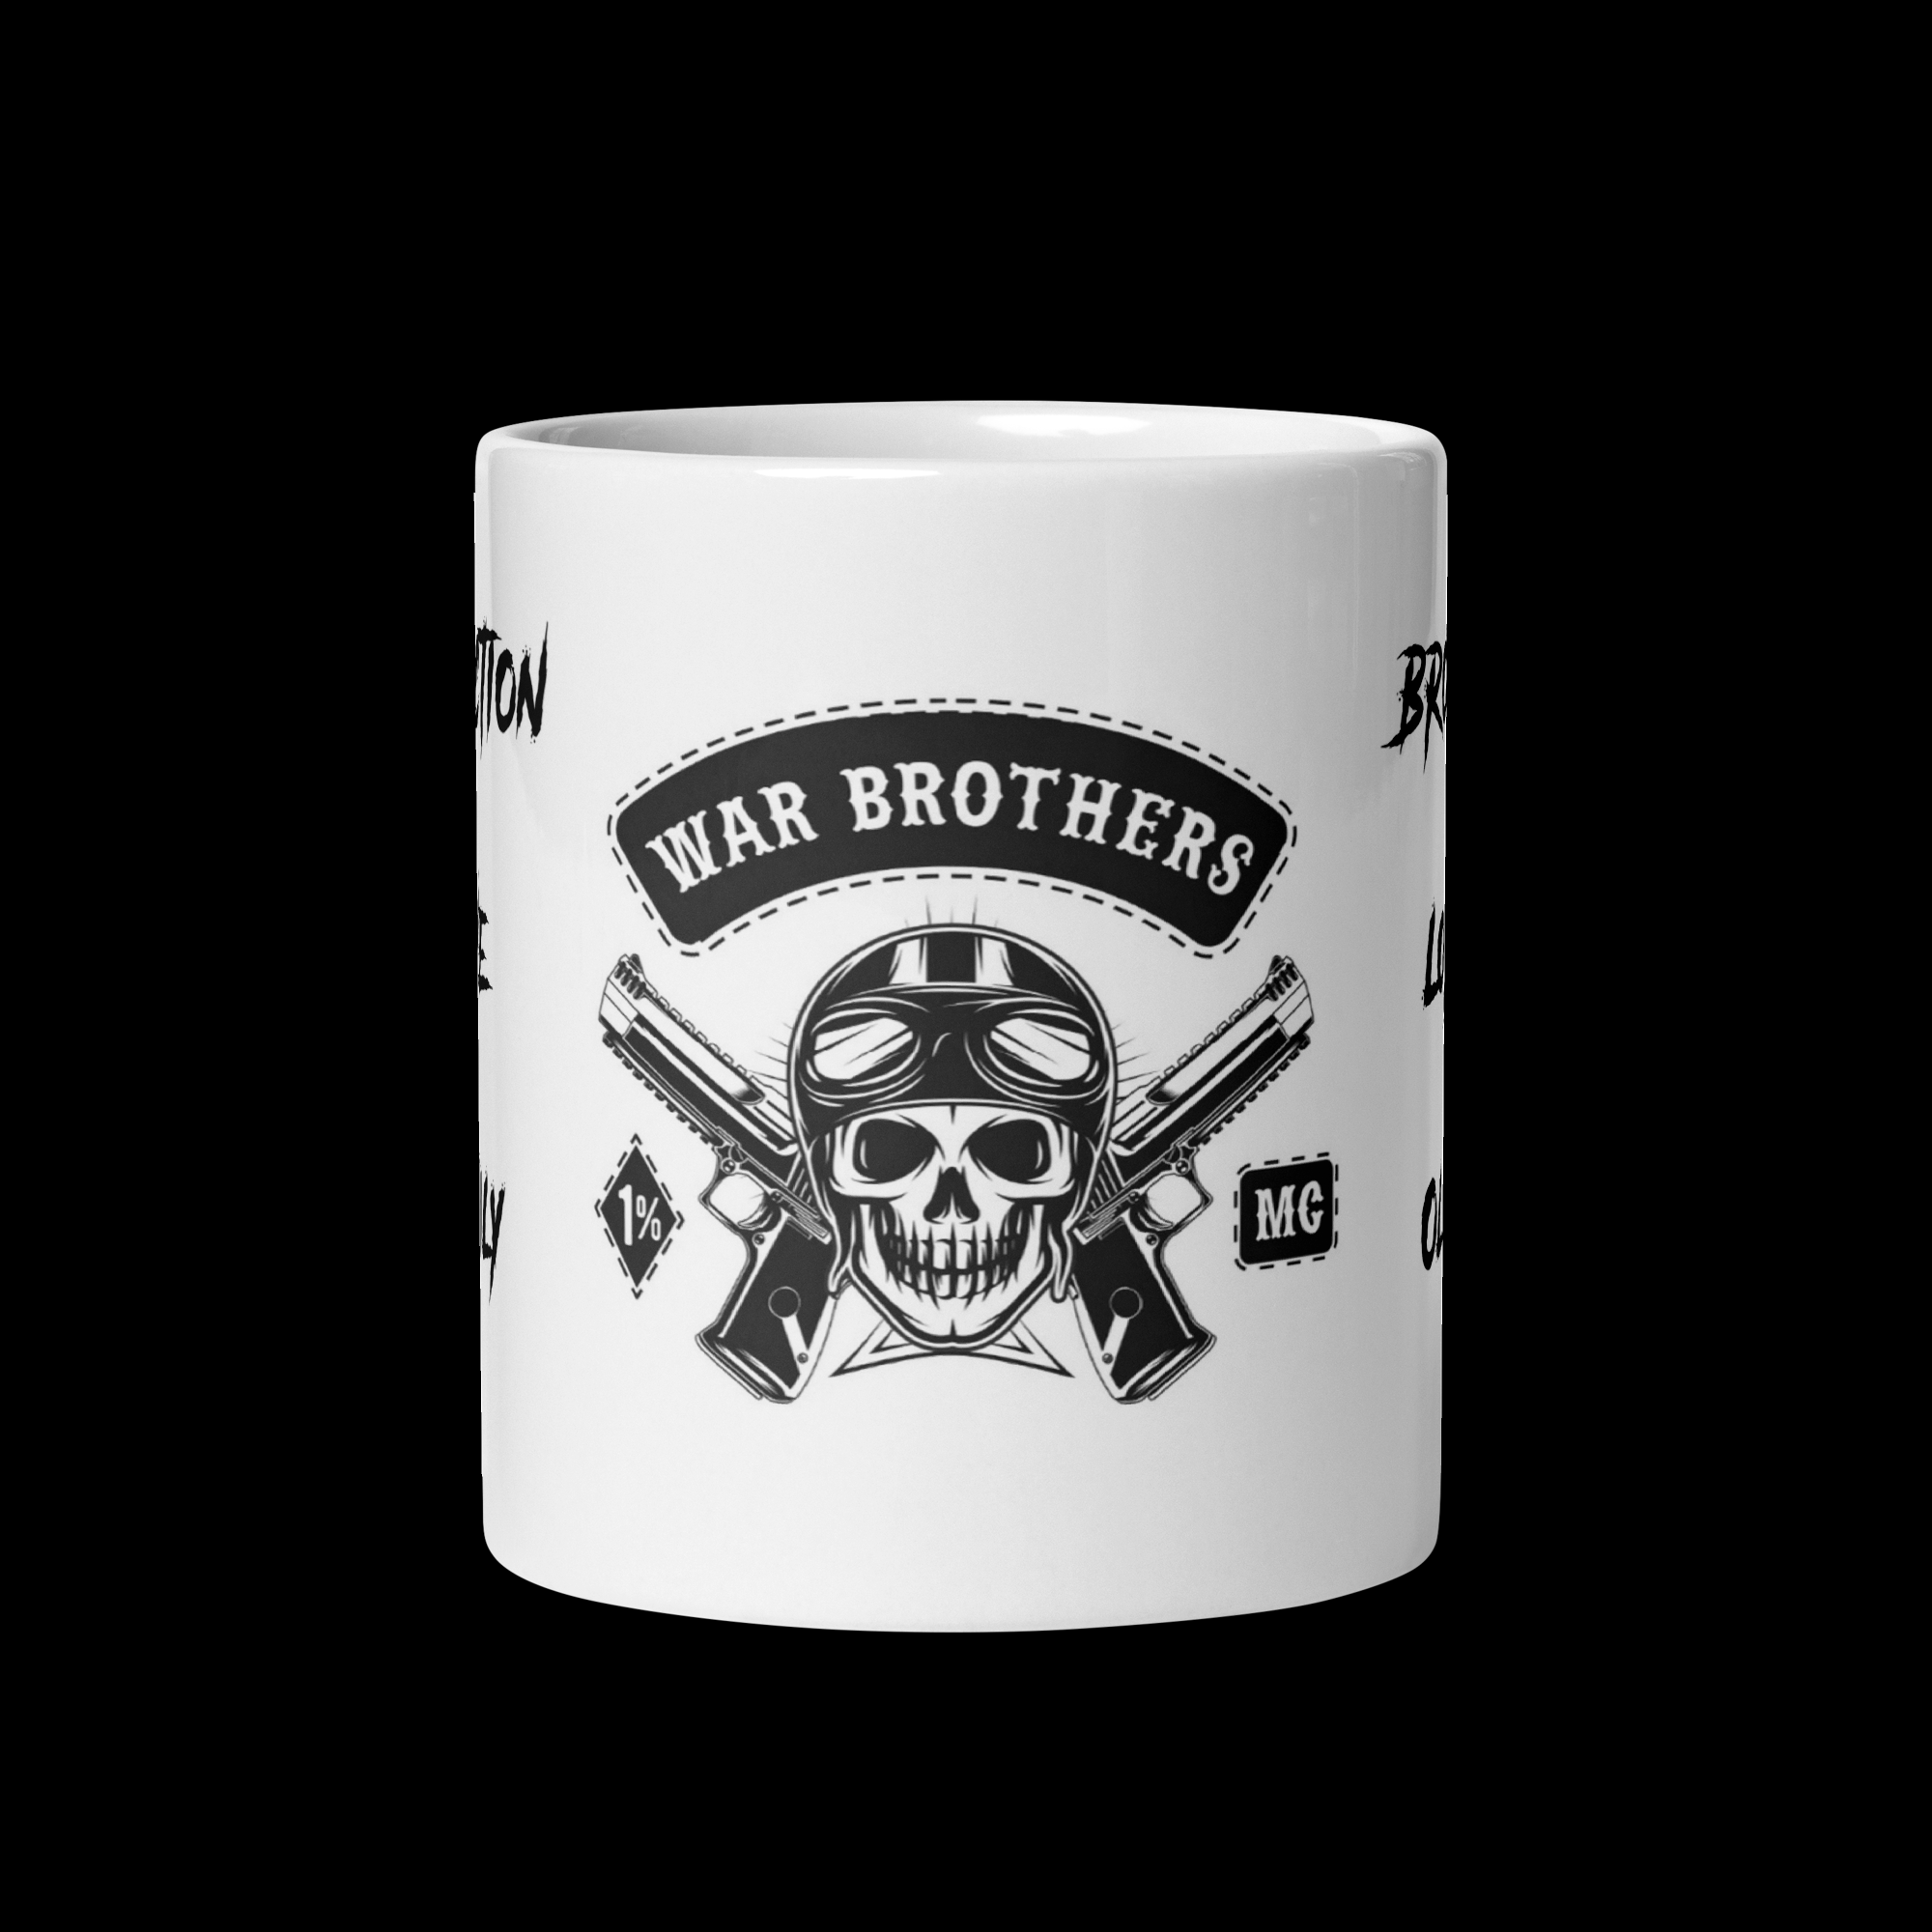 War Brothers MC mug